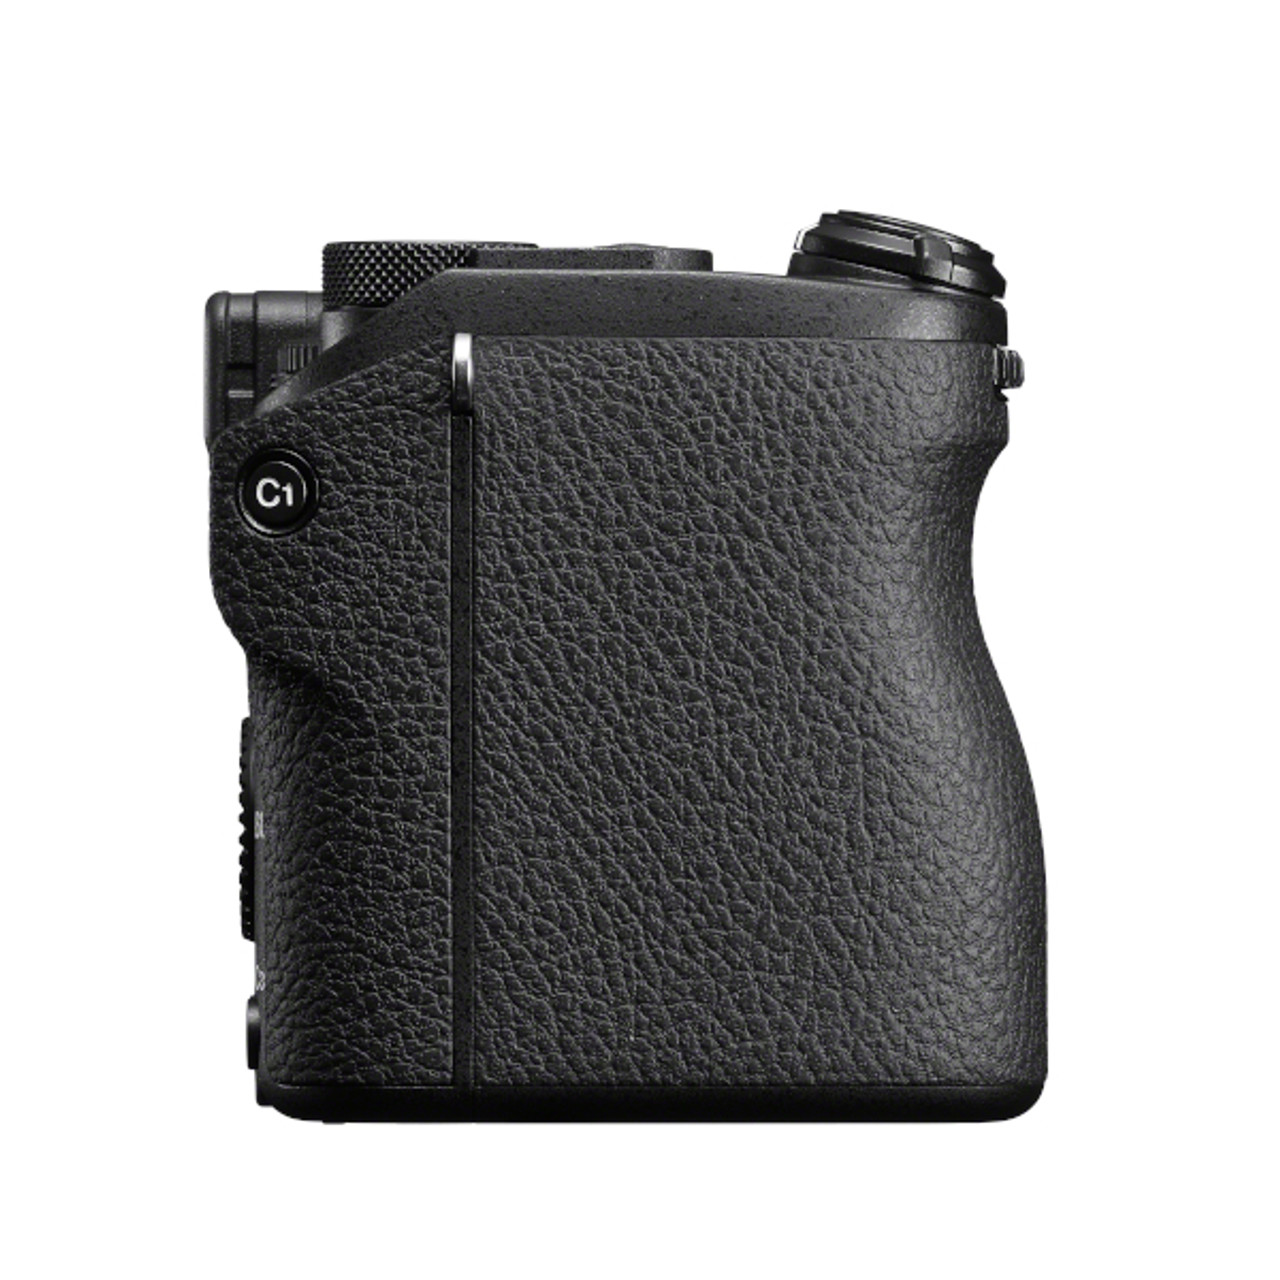 Sony A6700 18-135mm Kit Black